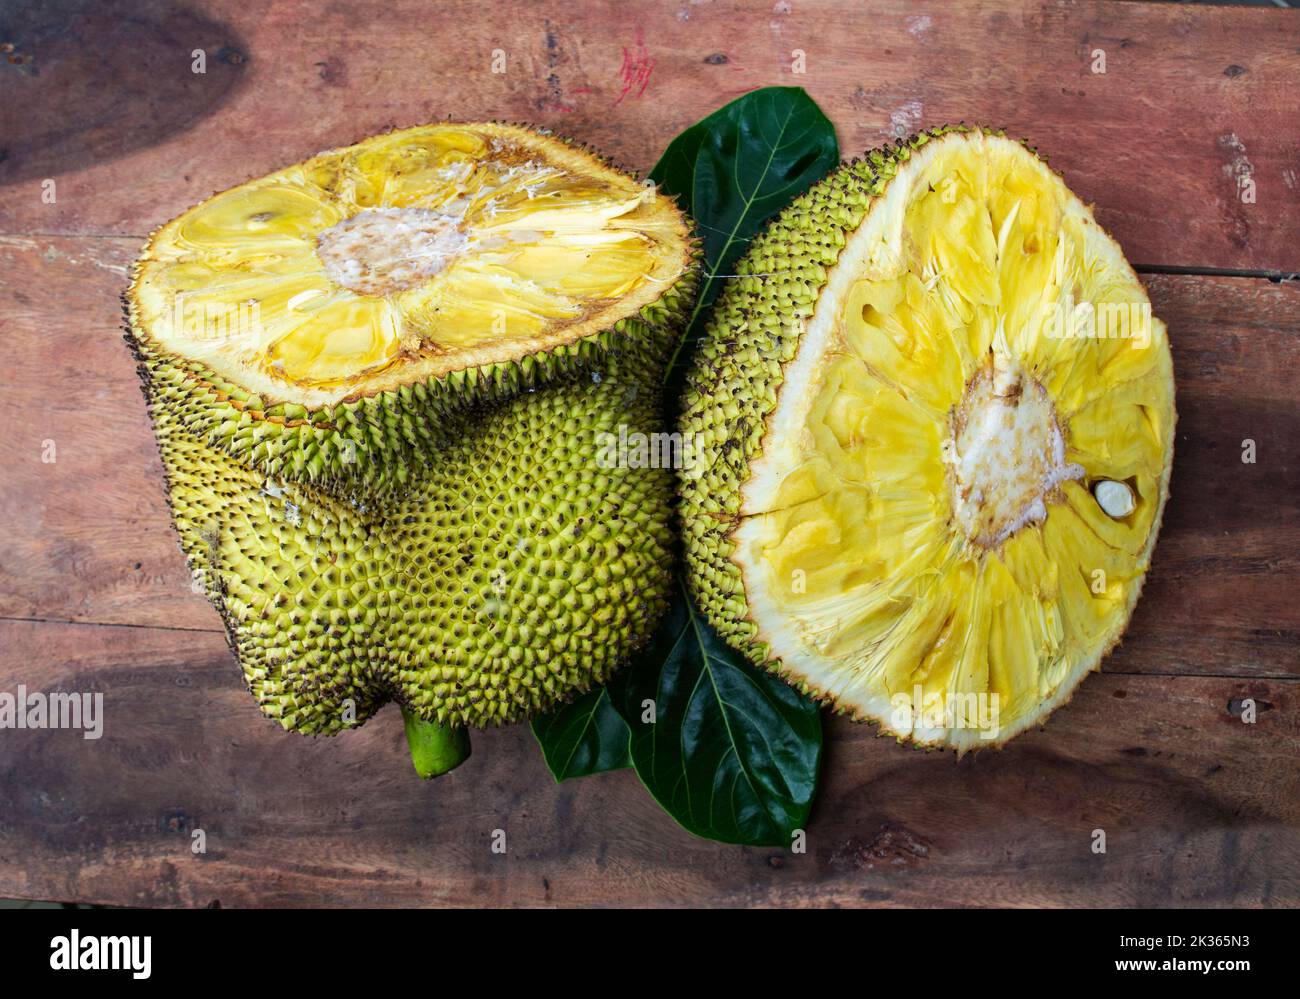 Jackfruit on wooden background. popular summer fruit in Asia. Stock Photo